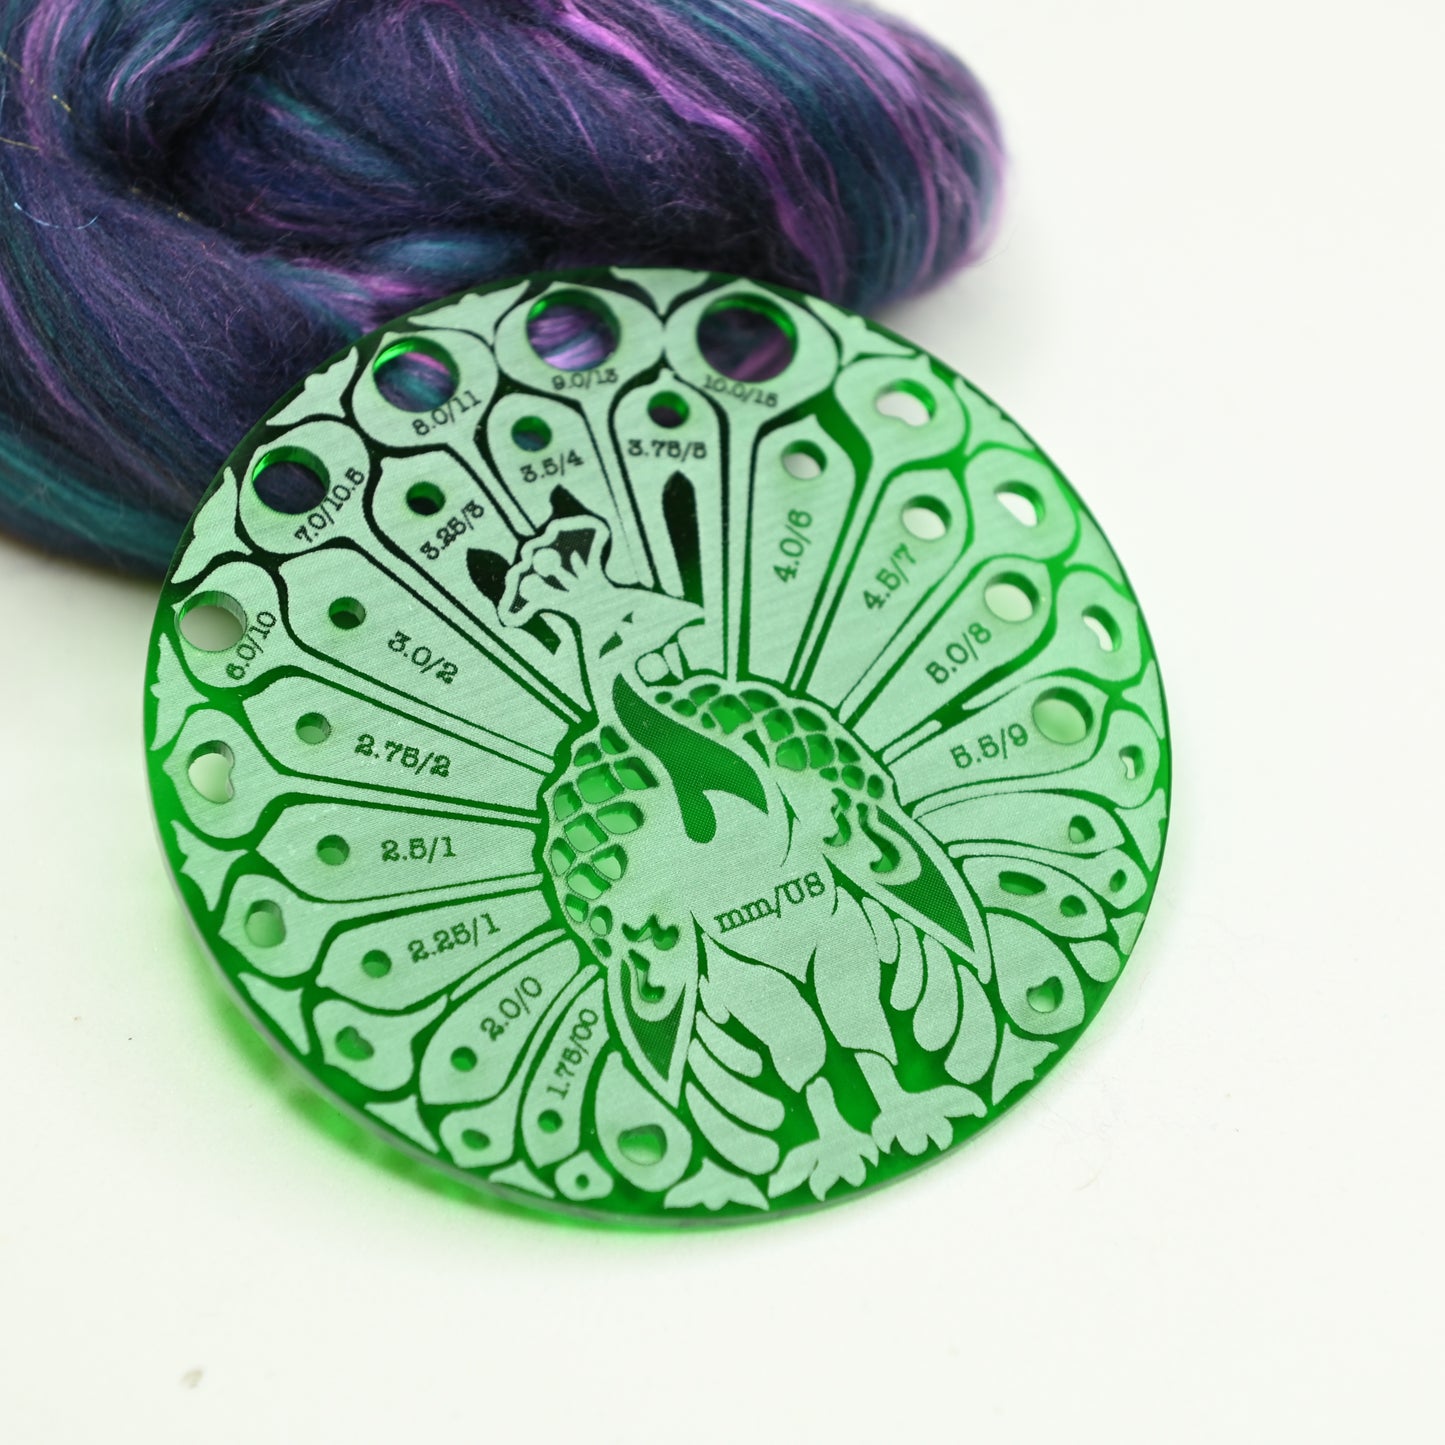 Peacock Knitting Needle Gauge Metric US - Assorted Acrylic Colors and Woods